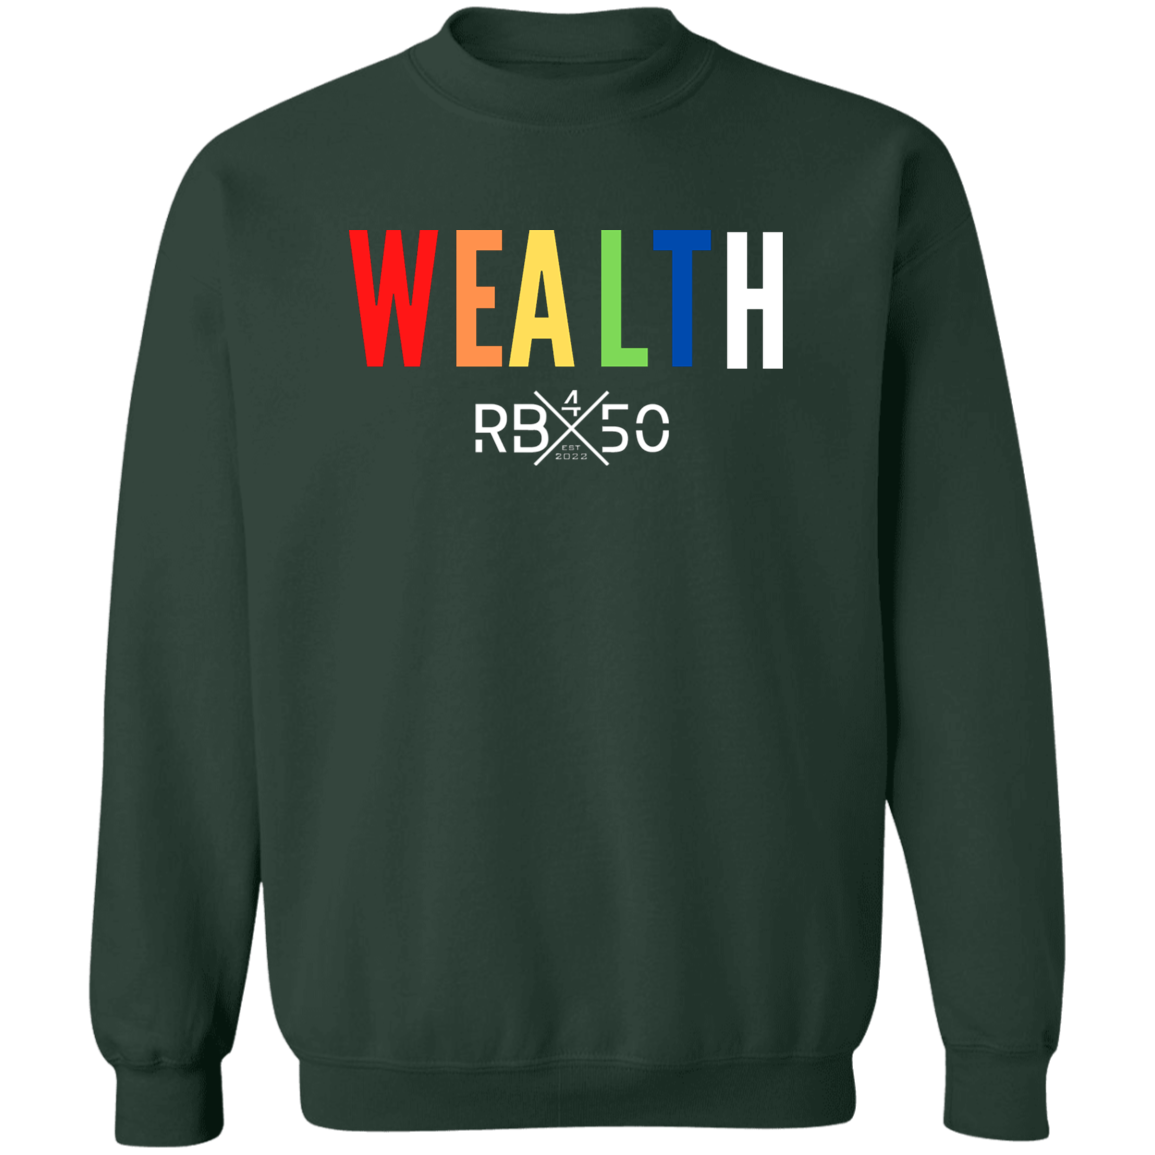 RB450 WEALTH Pullover Crewneck Sweatshirt 8 oz (Closeout)